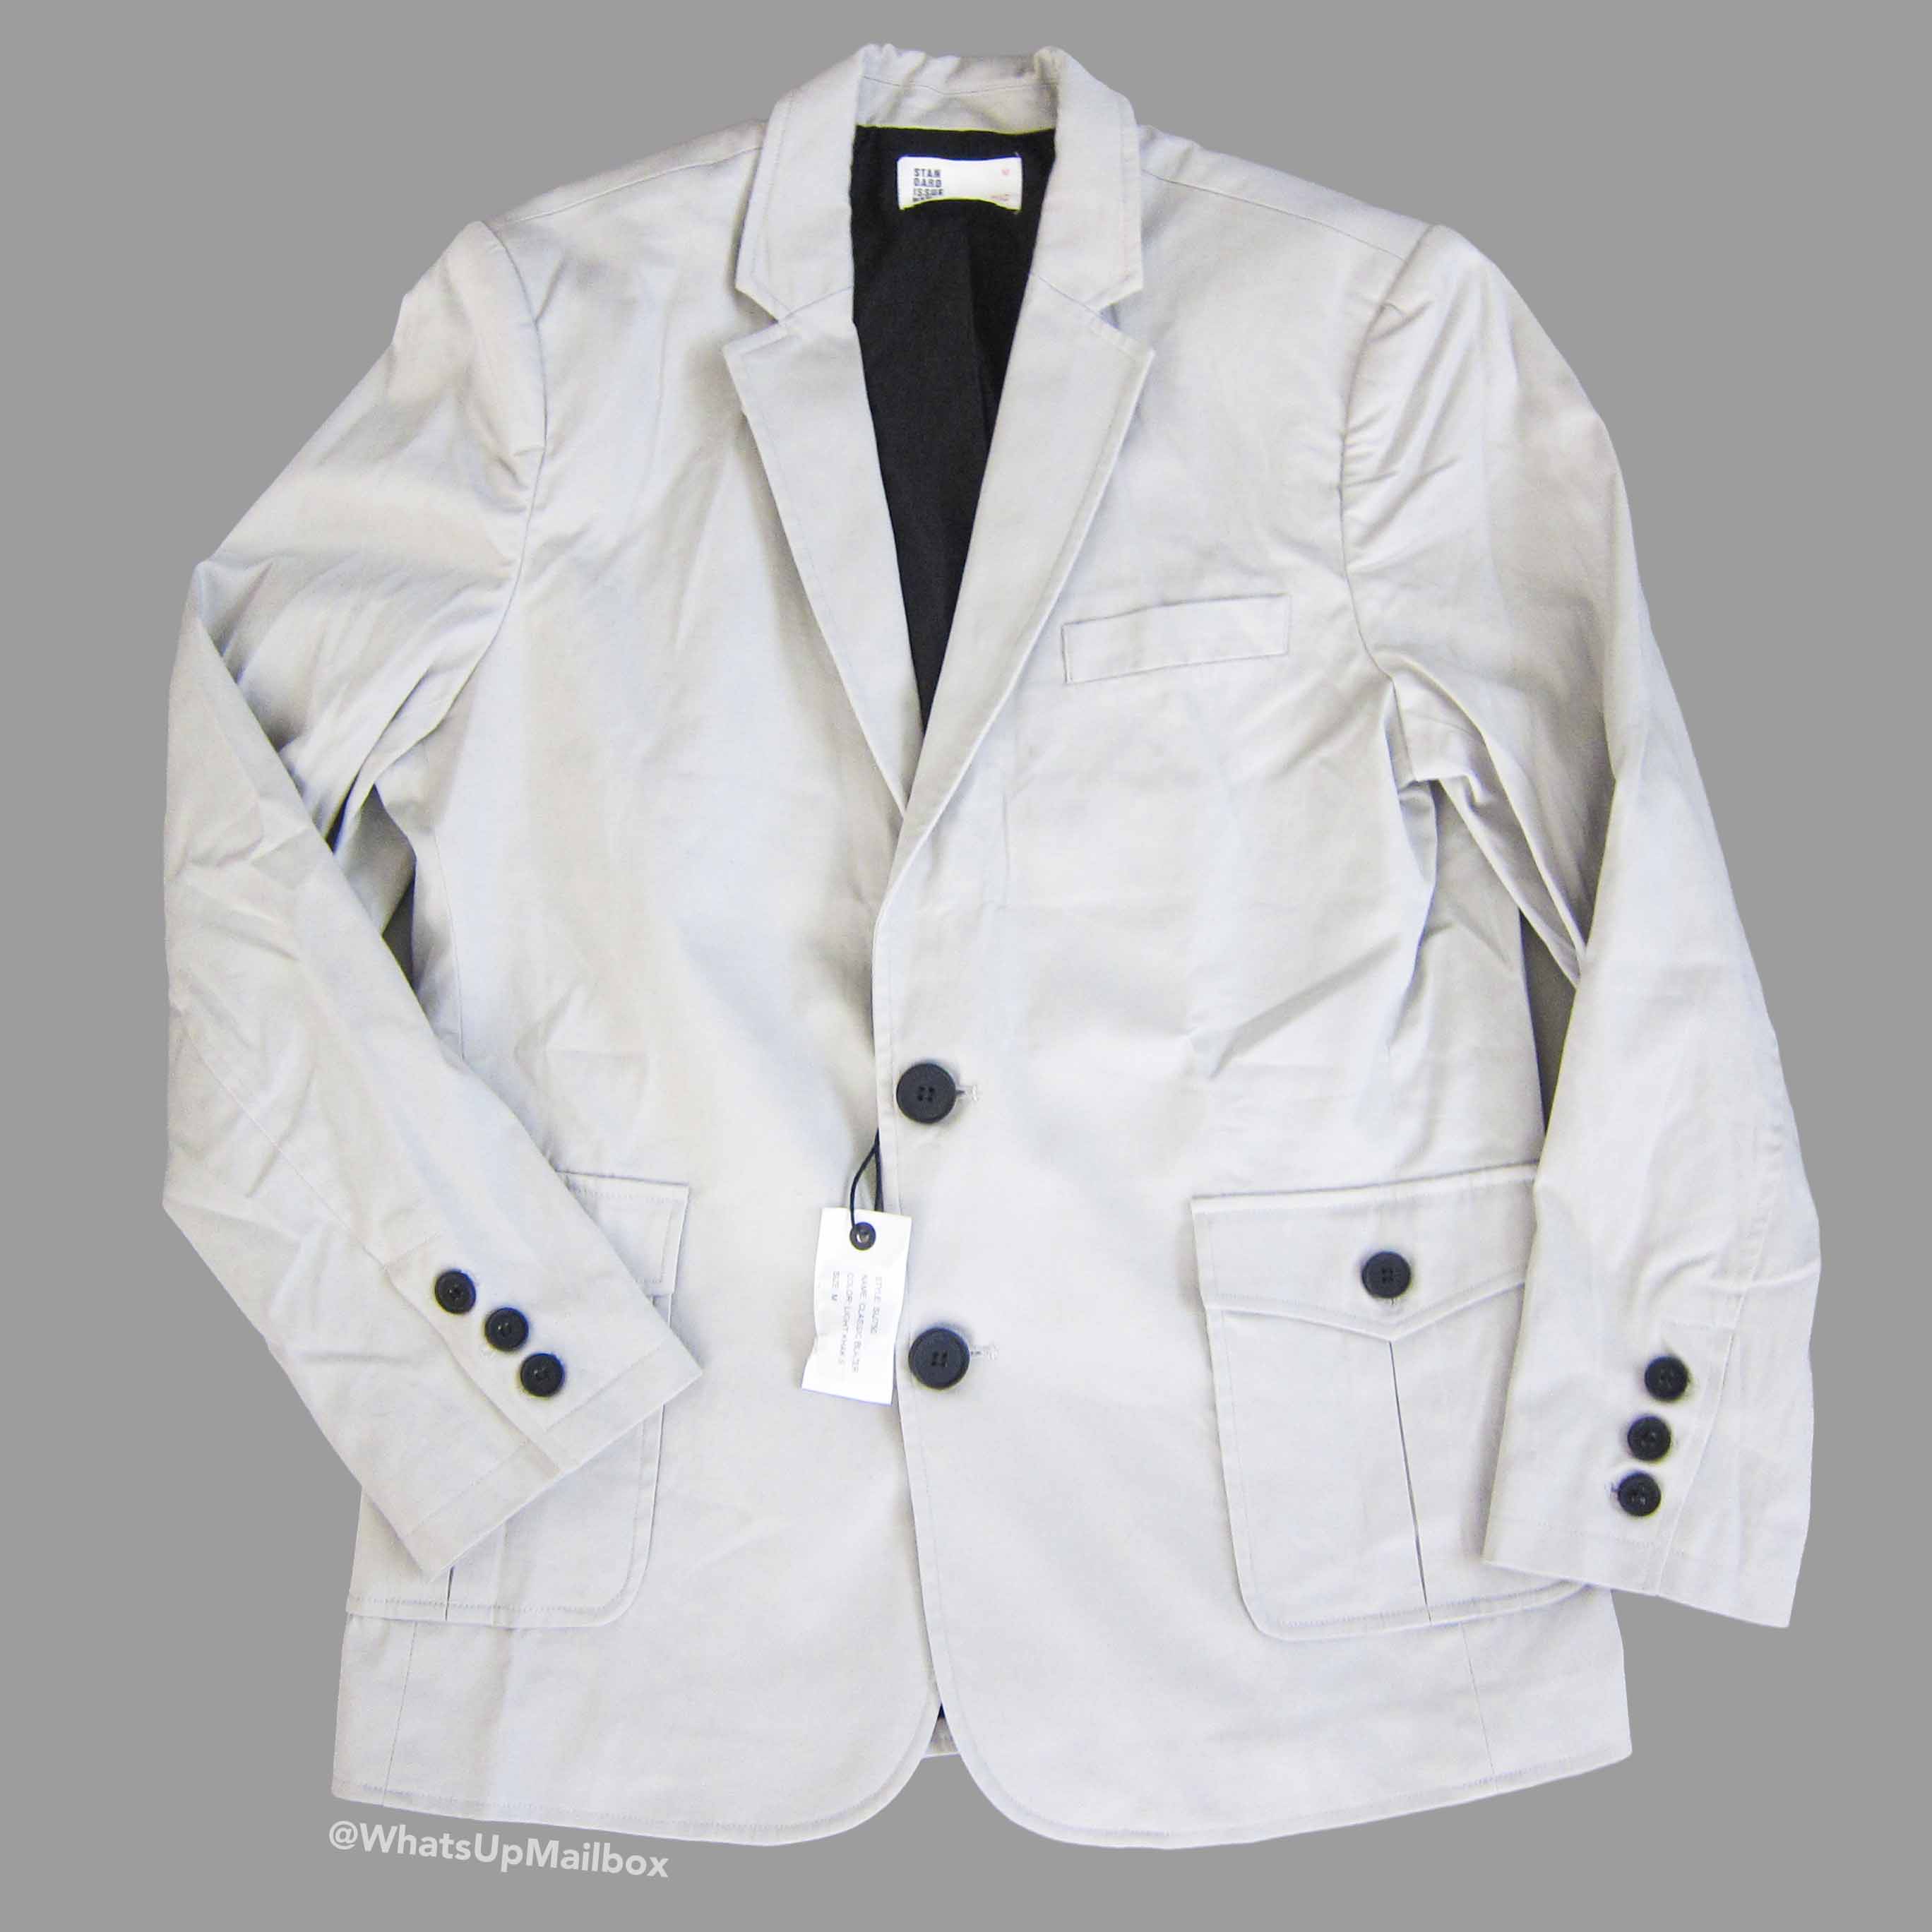 Trendy Butler - Standard Issue NYC Khaki Jacket